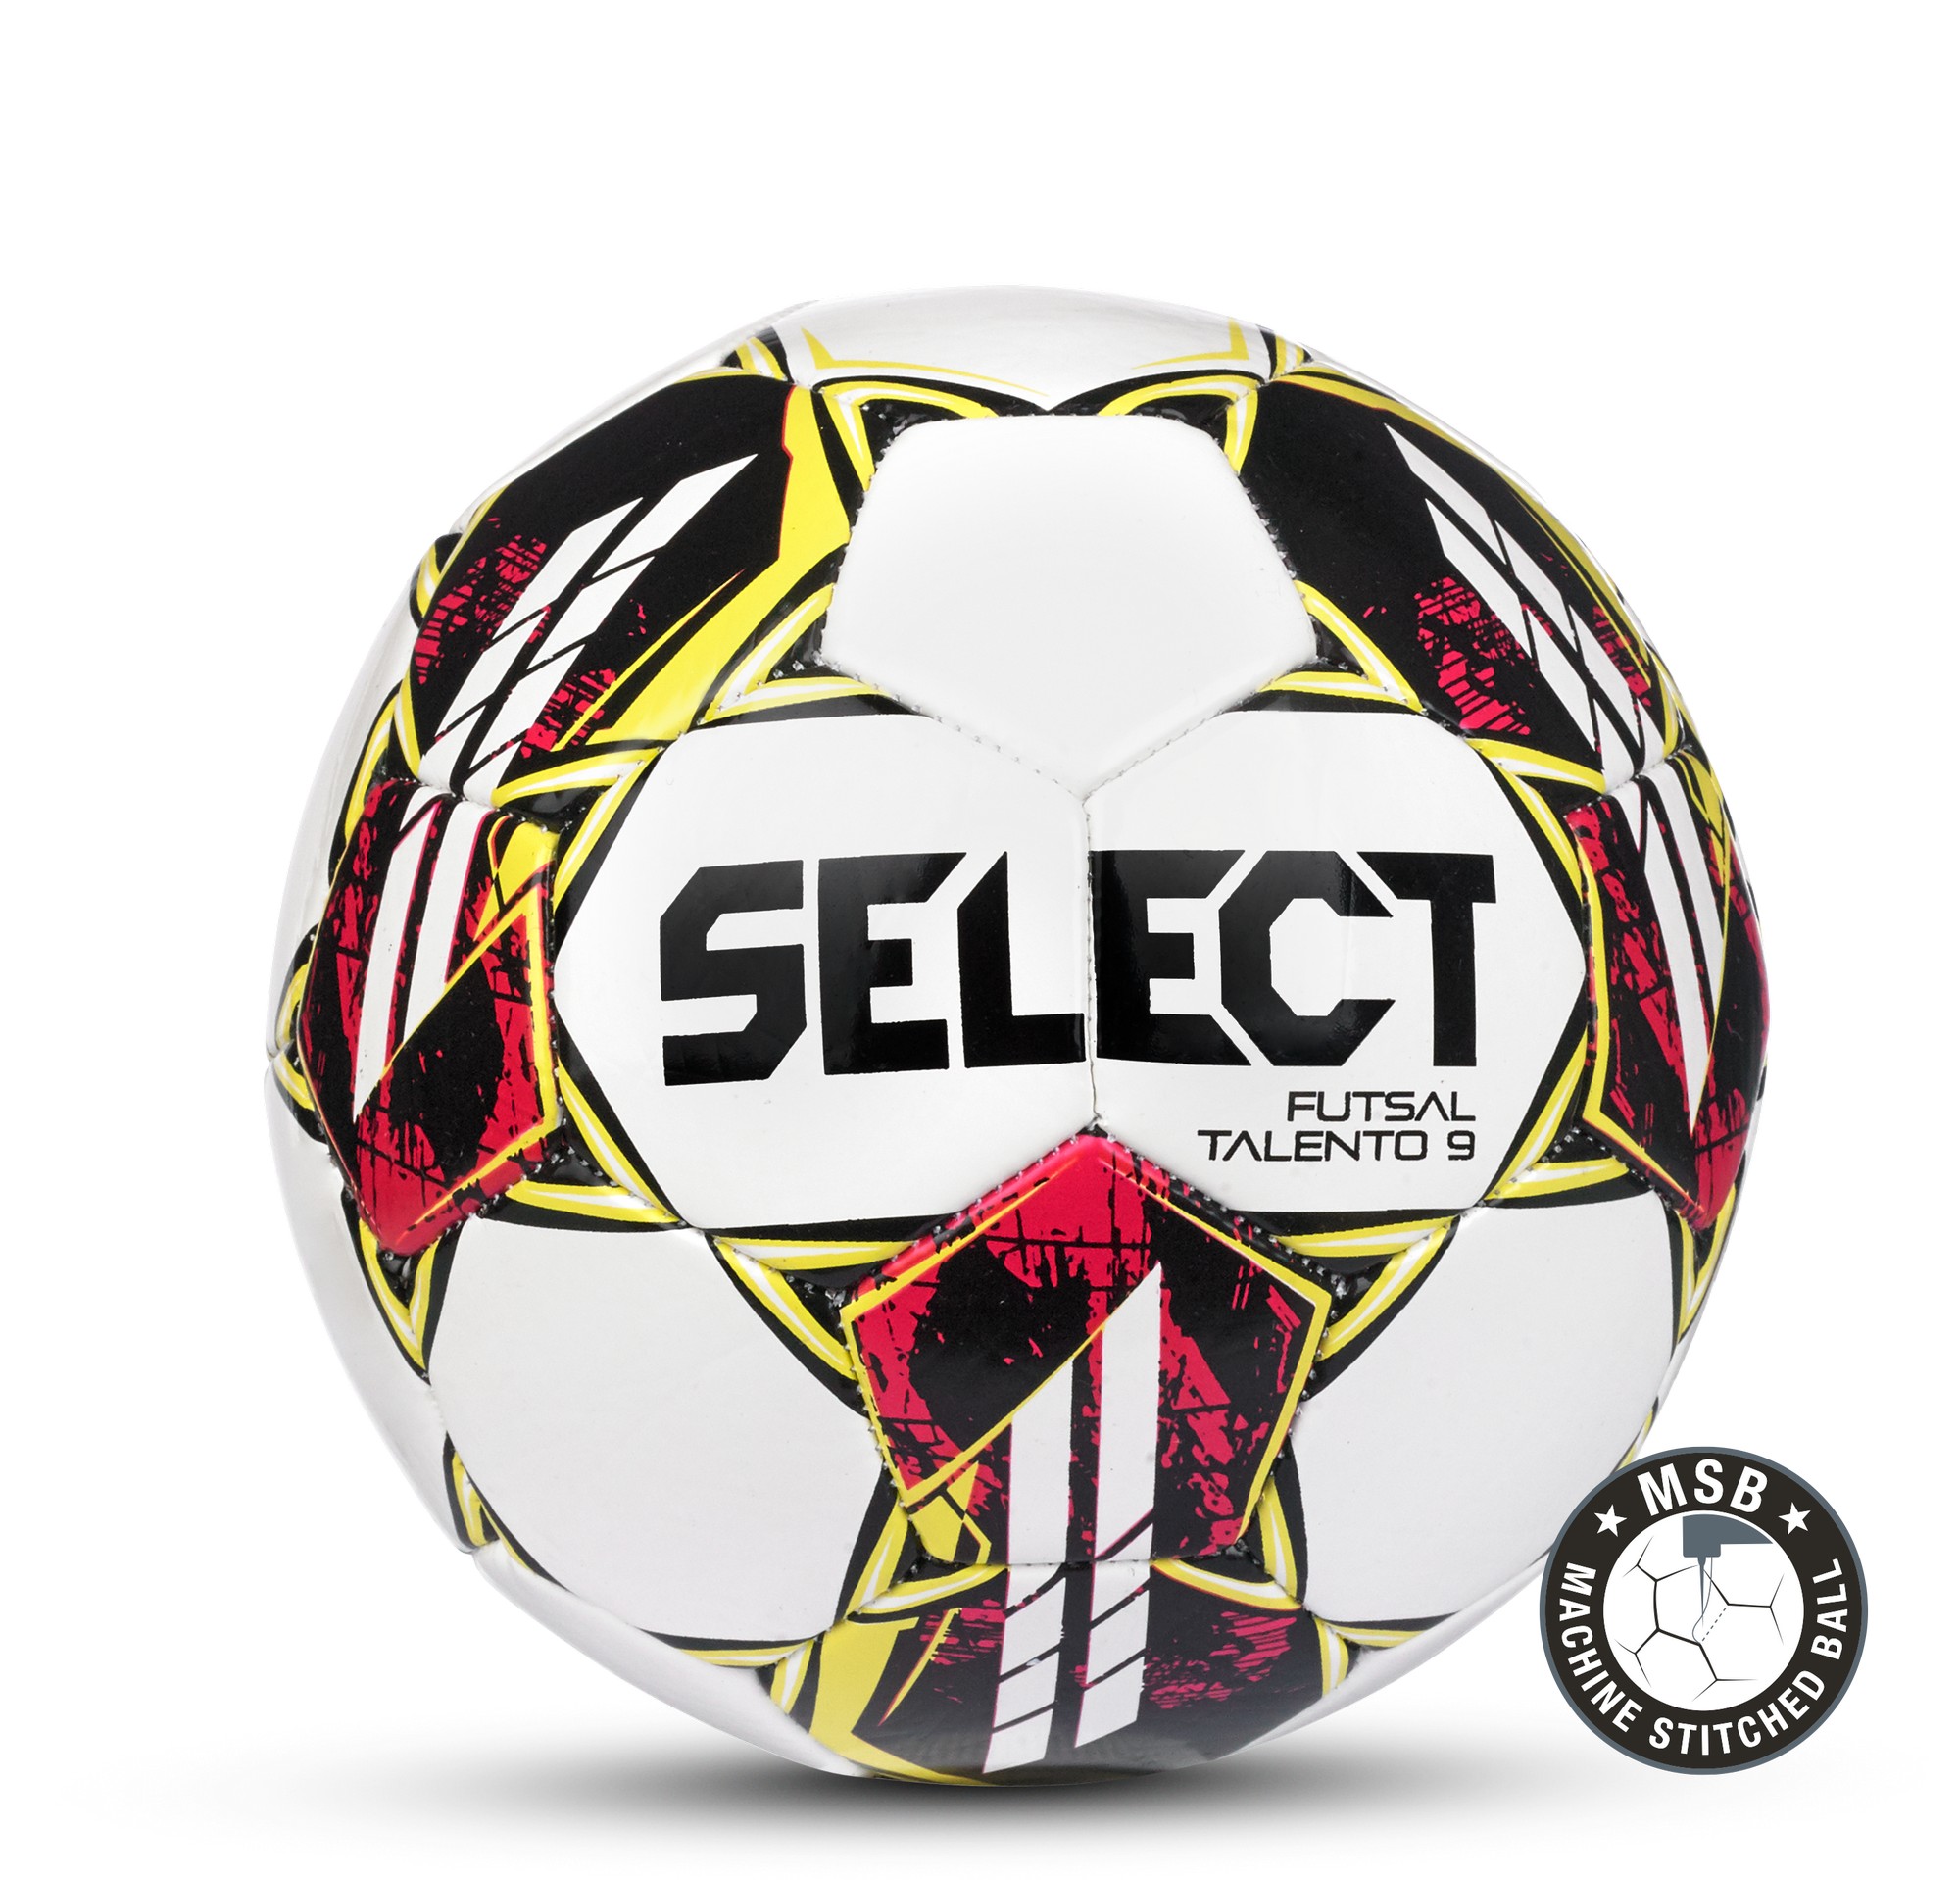   Select Futsal Talento 9 v22 1060460005